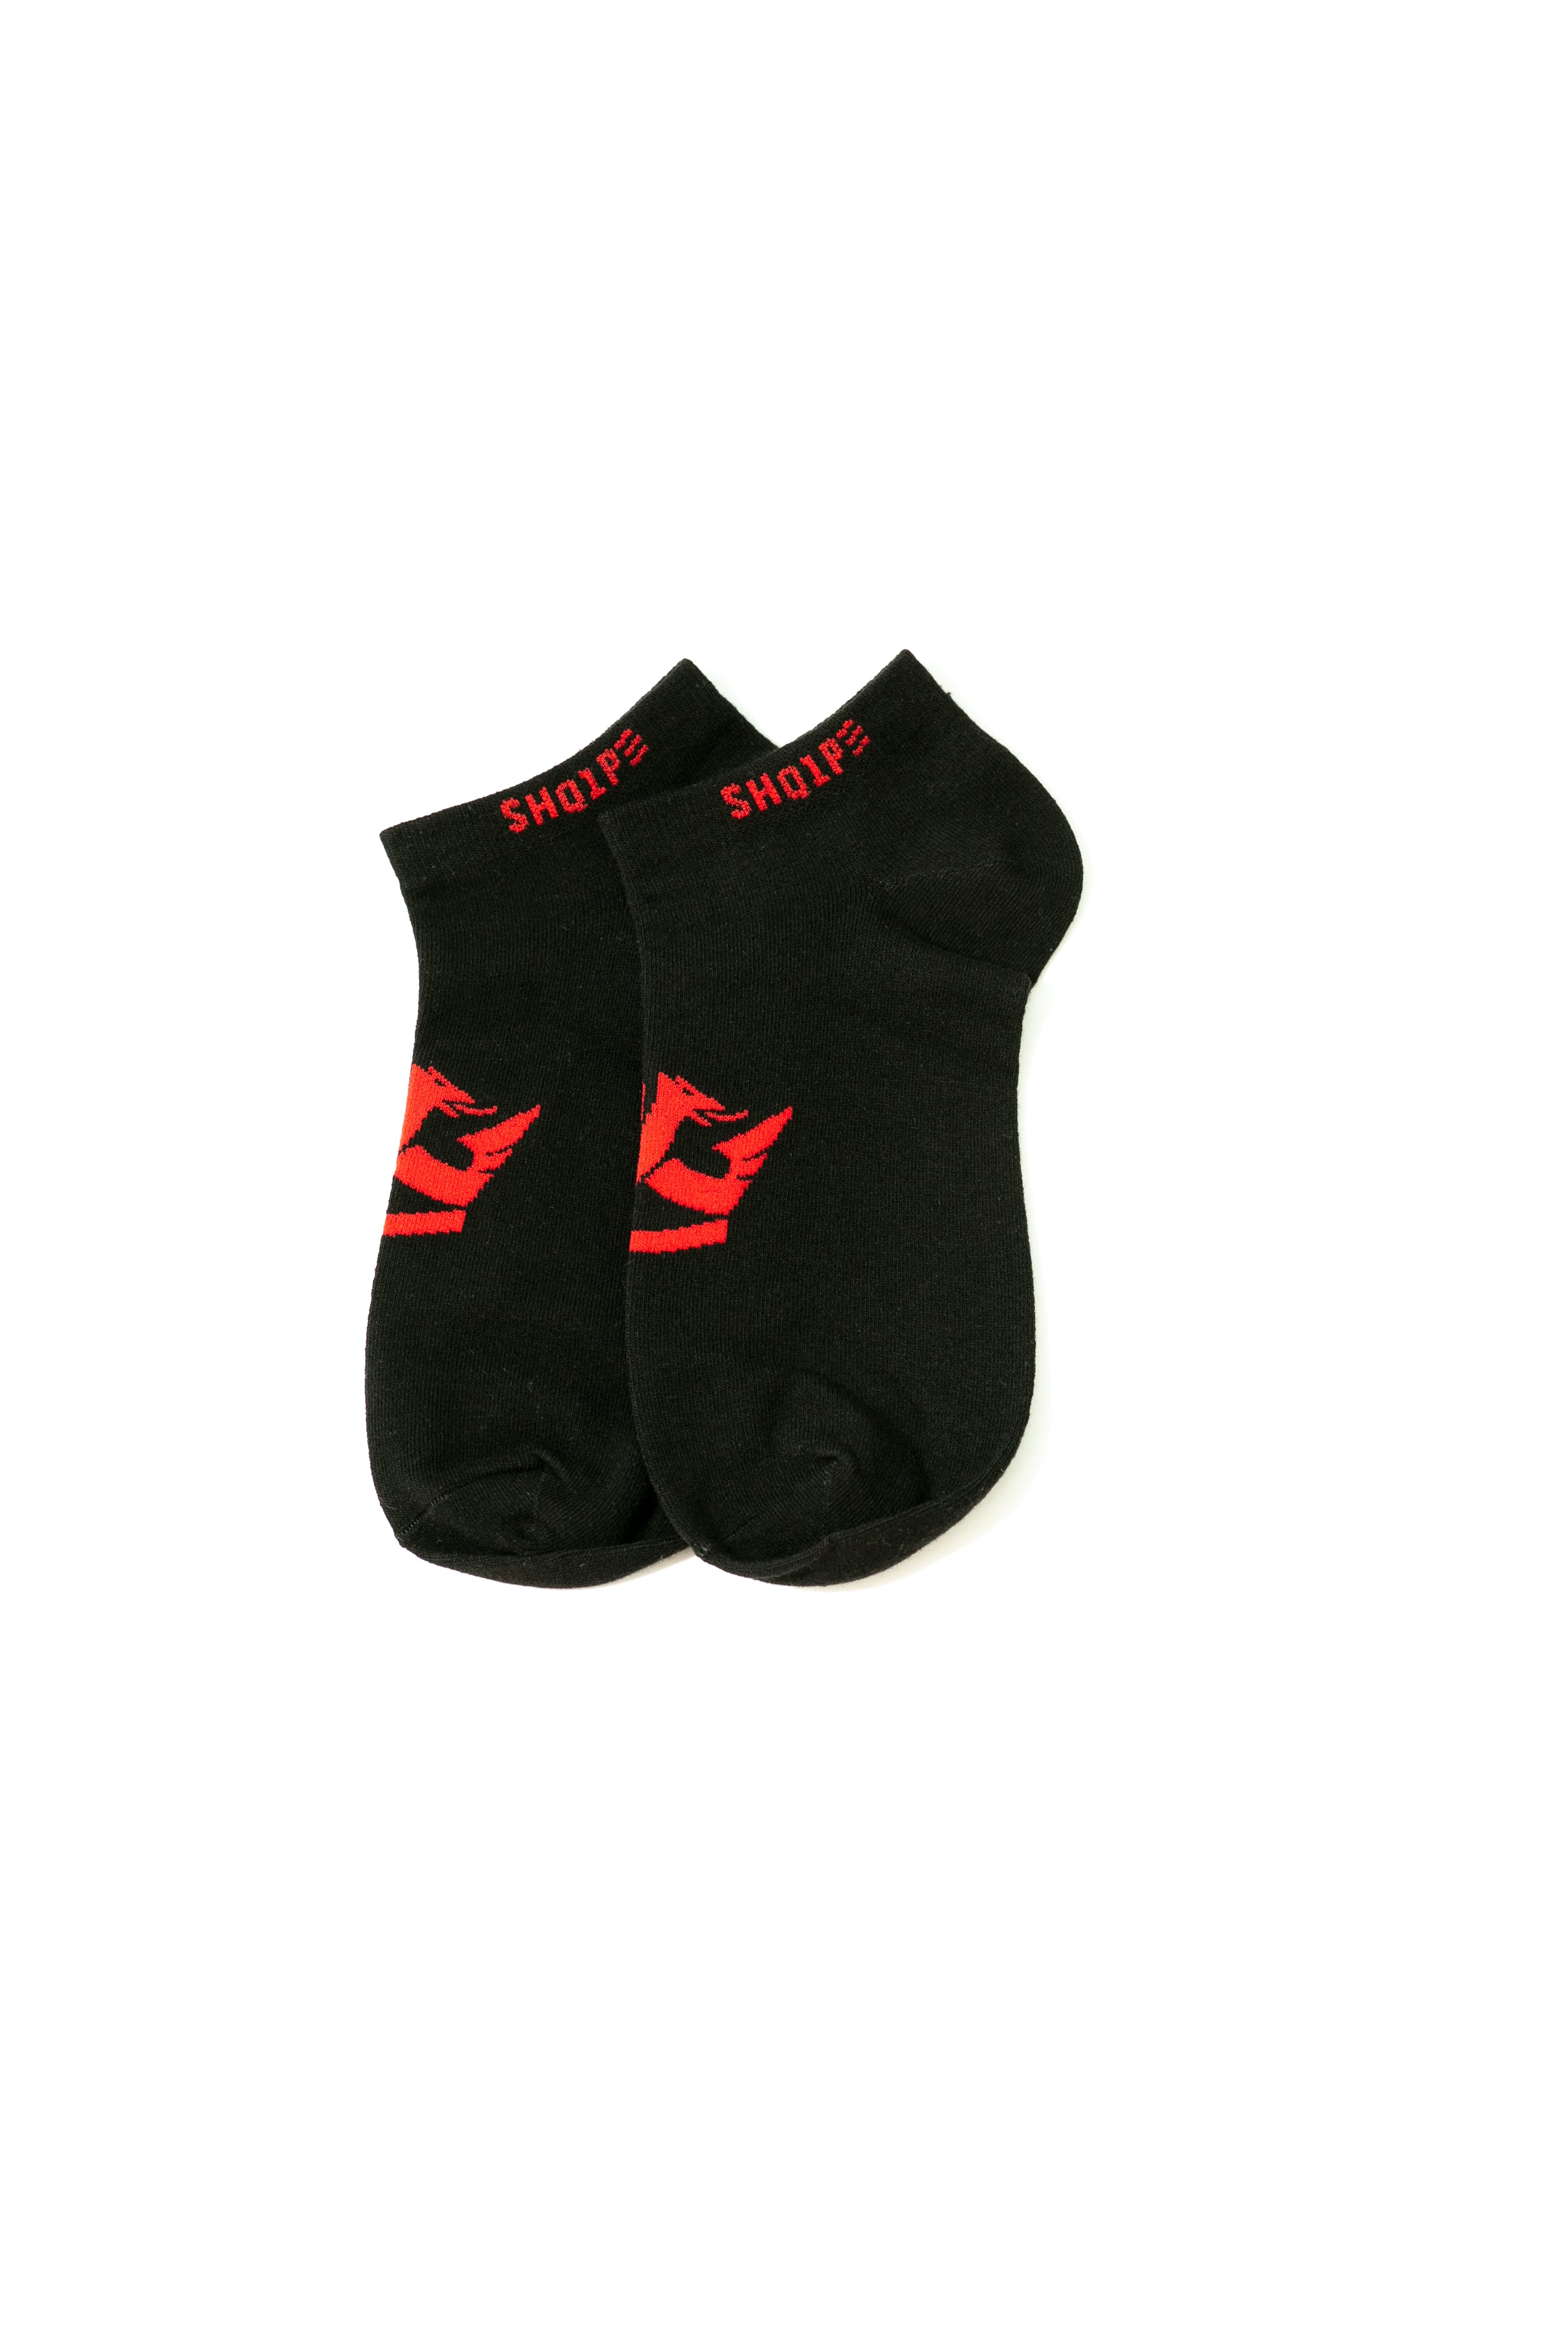 Shq1pe Socks Black/Red